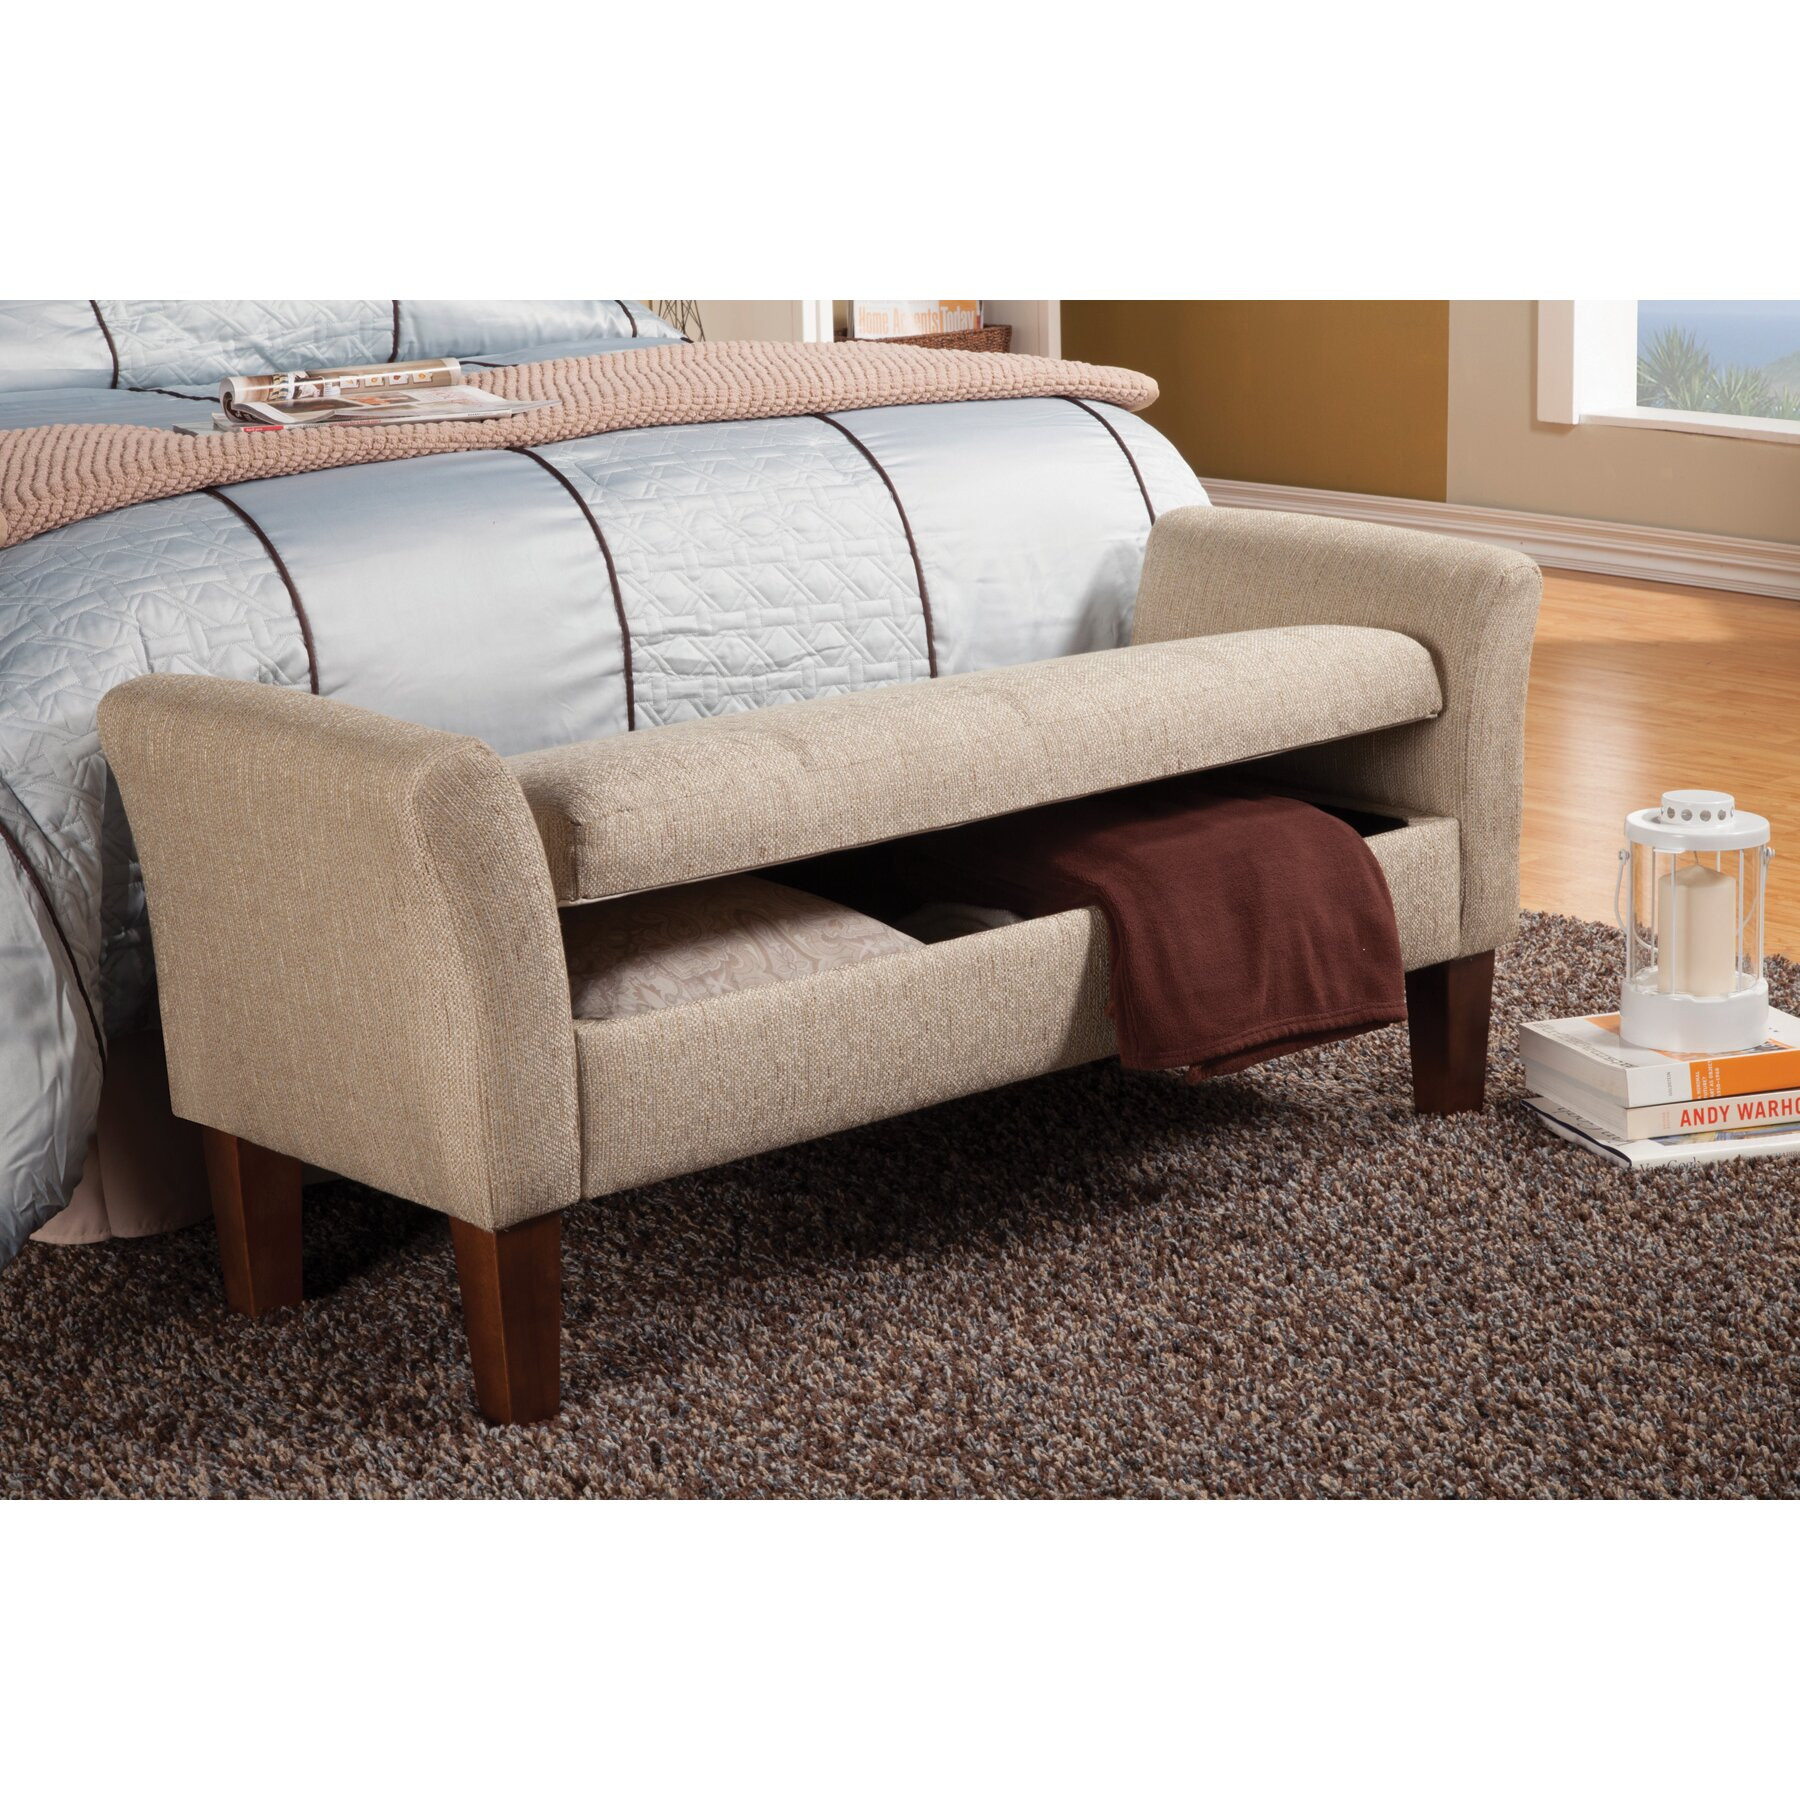 Bedroom Bench Storage
 Wildon Home Upholstered Storage Bedroom Bench & Reviews